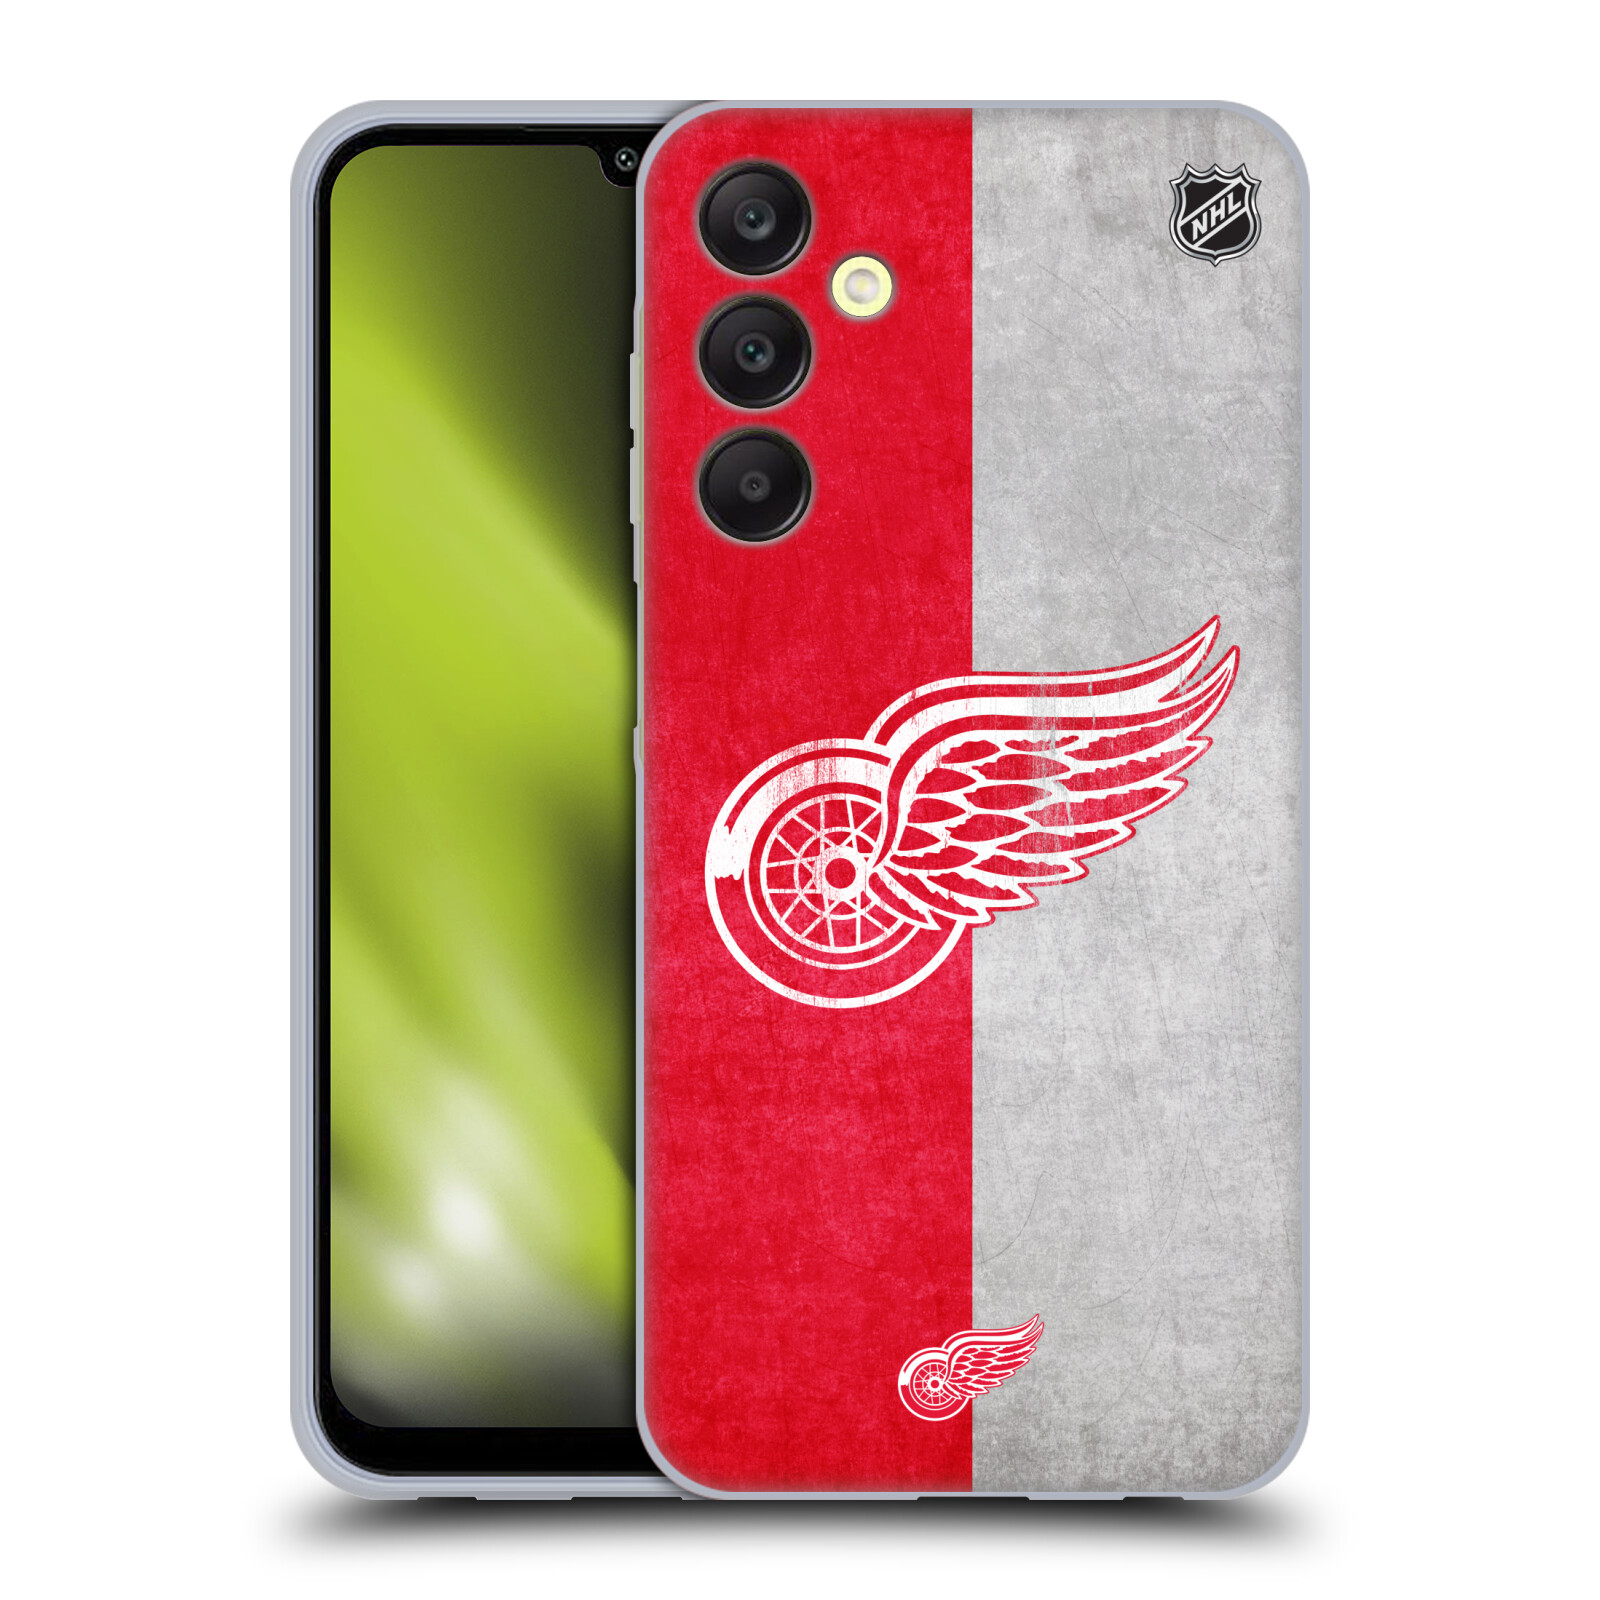 Silikonové pouzdro na mobil Samsung Galaxy A25 5G - NHL - Půlené logo Detroit Red Wings (Silikonový kryt, obal, pouzdro na mobilní telefon Samsung Galaxy A25 5G s licencovaným motivem NHL - Půlené logo Detroit Red Wings)